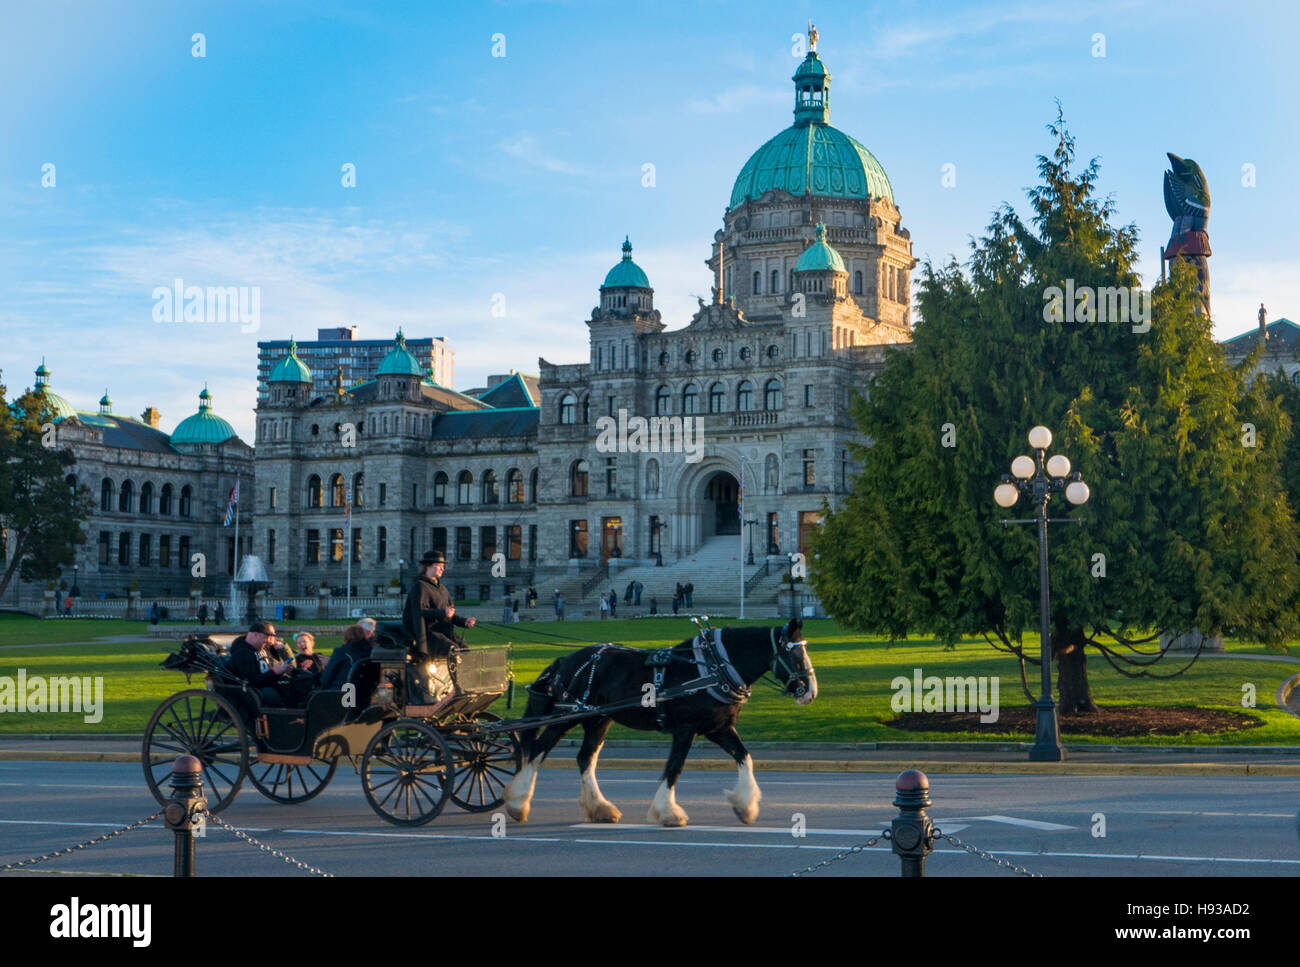 Parliment Building, Victoria Harbour, l'isola di Vancouver, Brithish Columbia, Canada Foto Stock